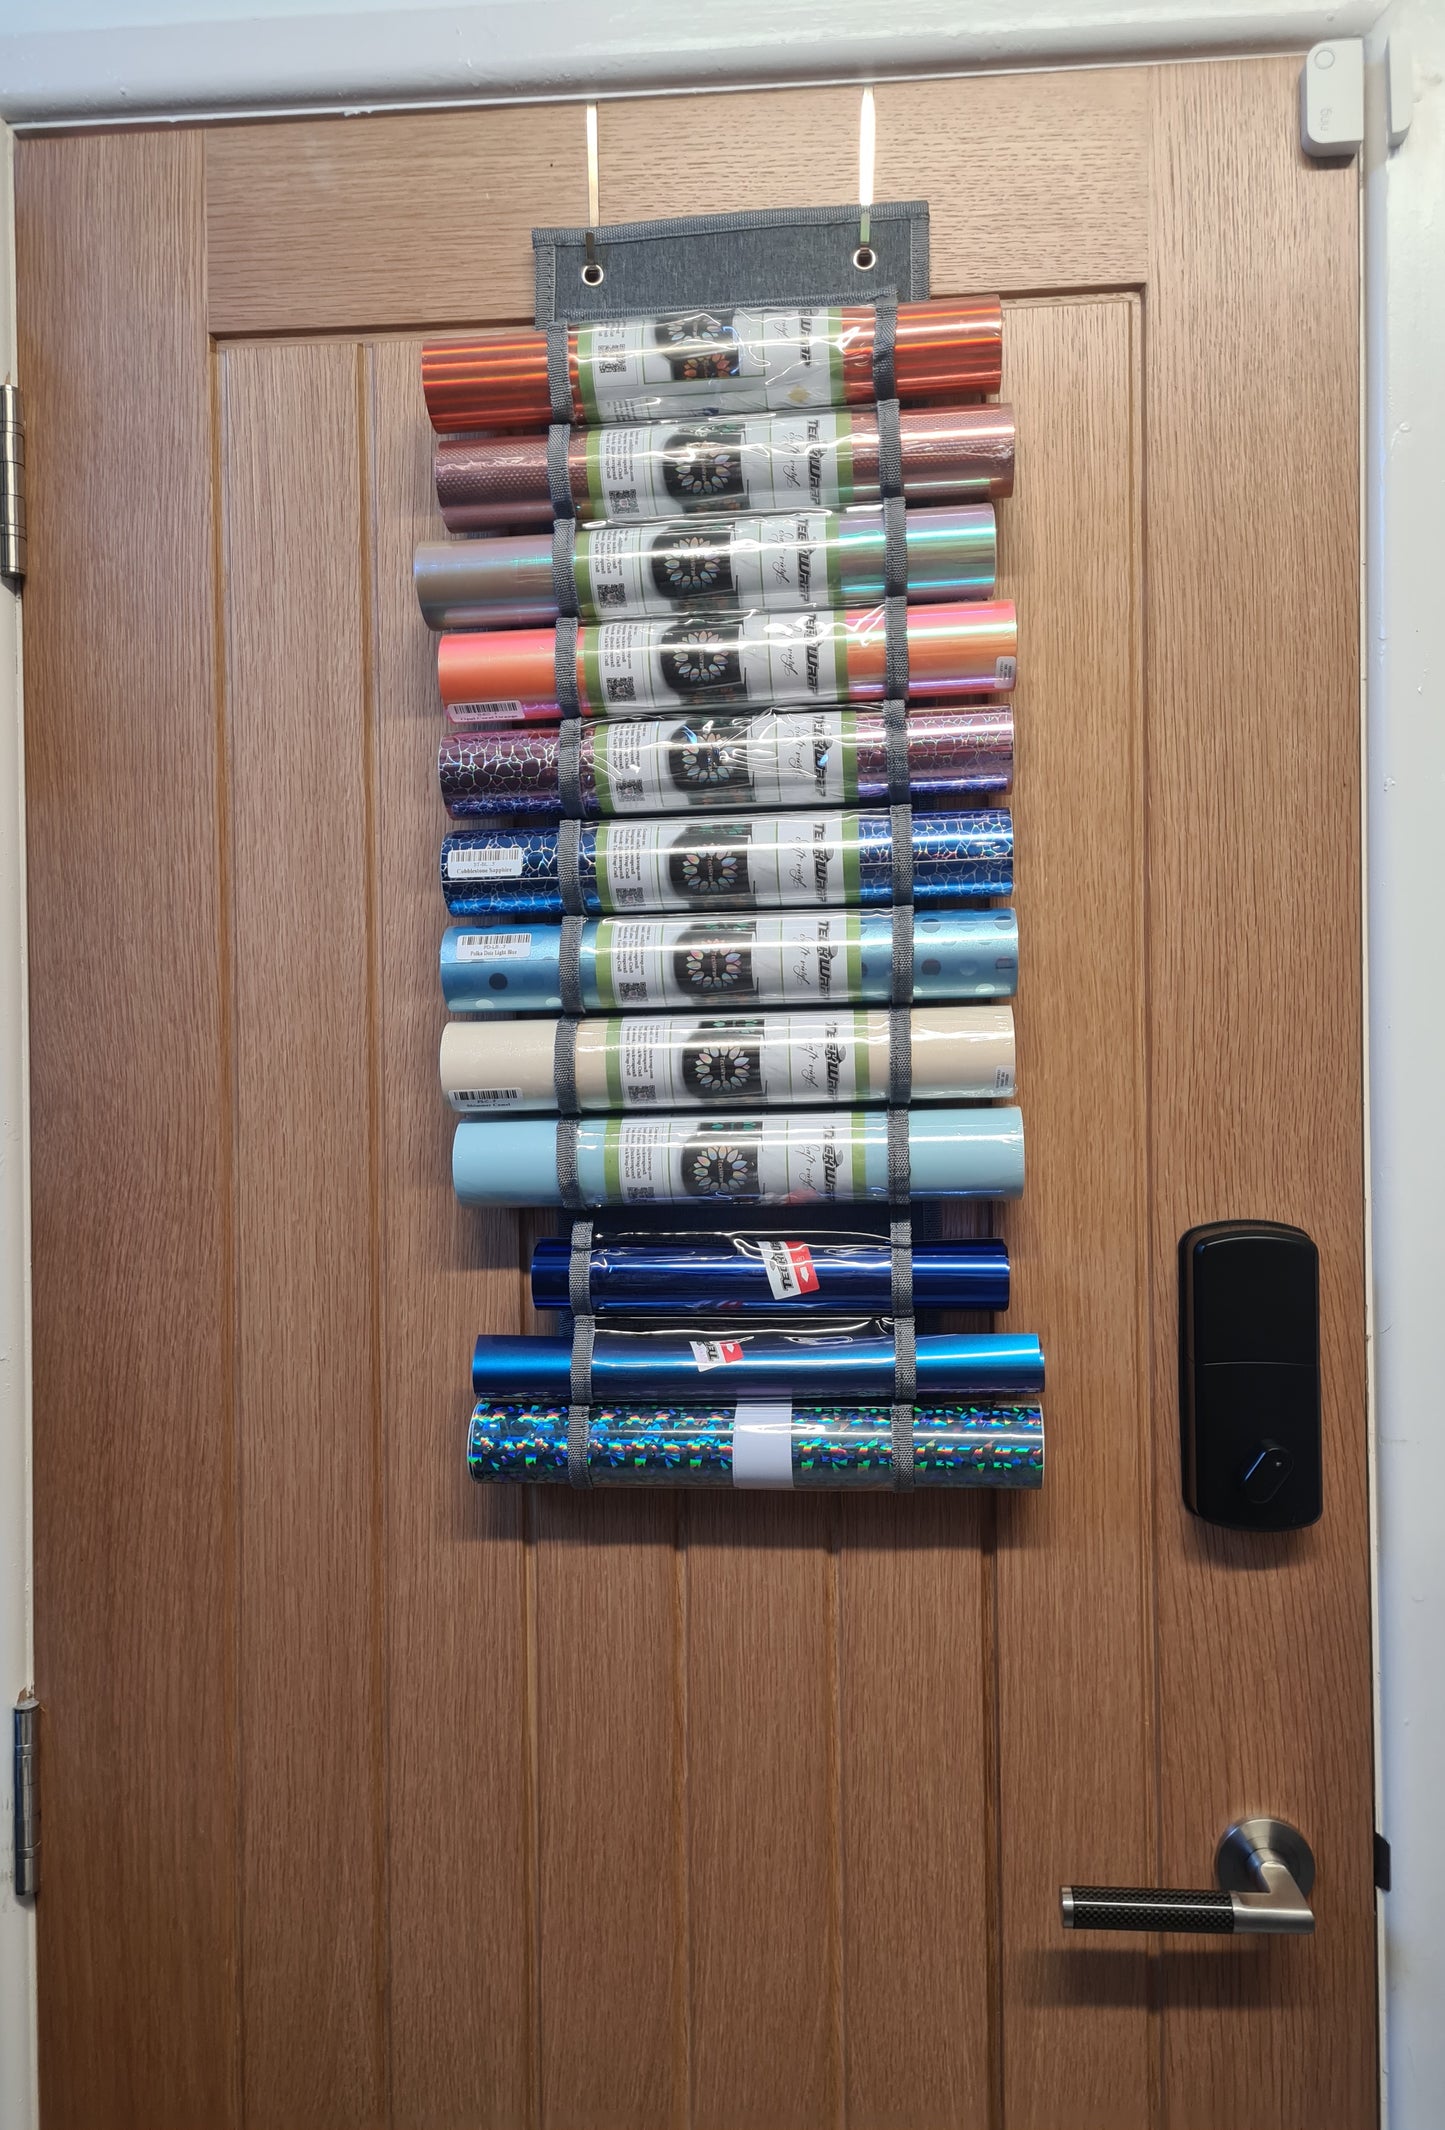 Storage racks for Rolls 48  Vinyl/ HTV roll holders, wall or door mounted.